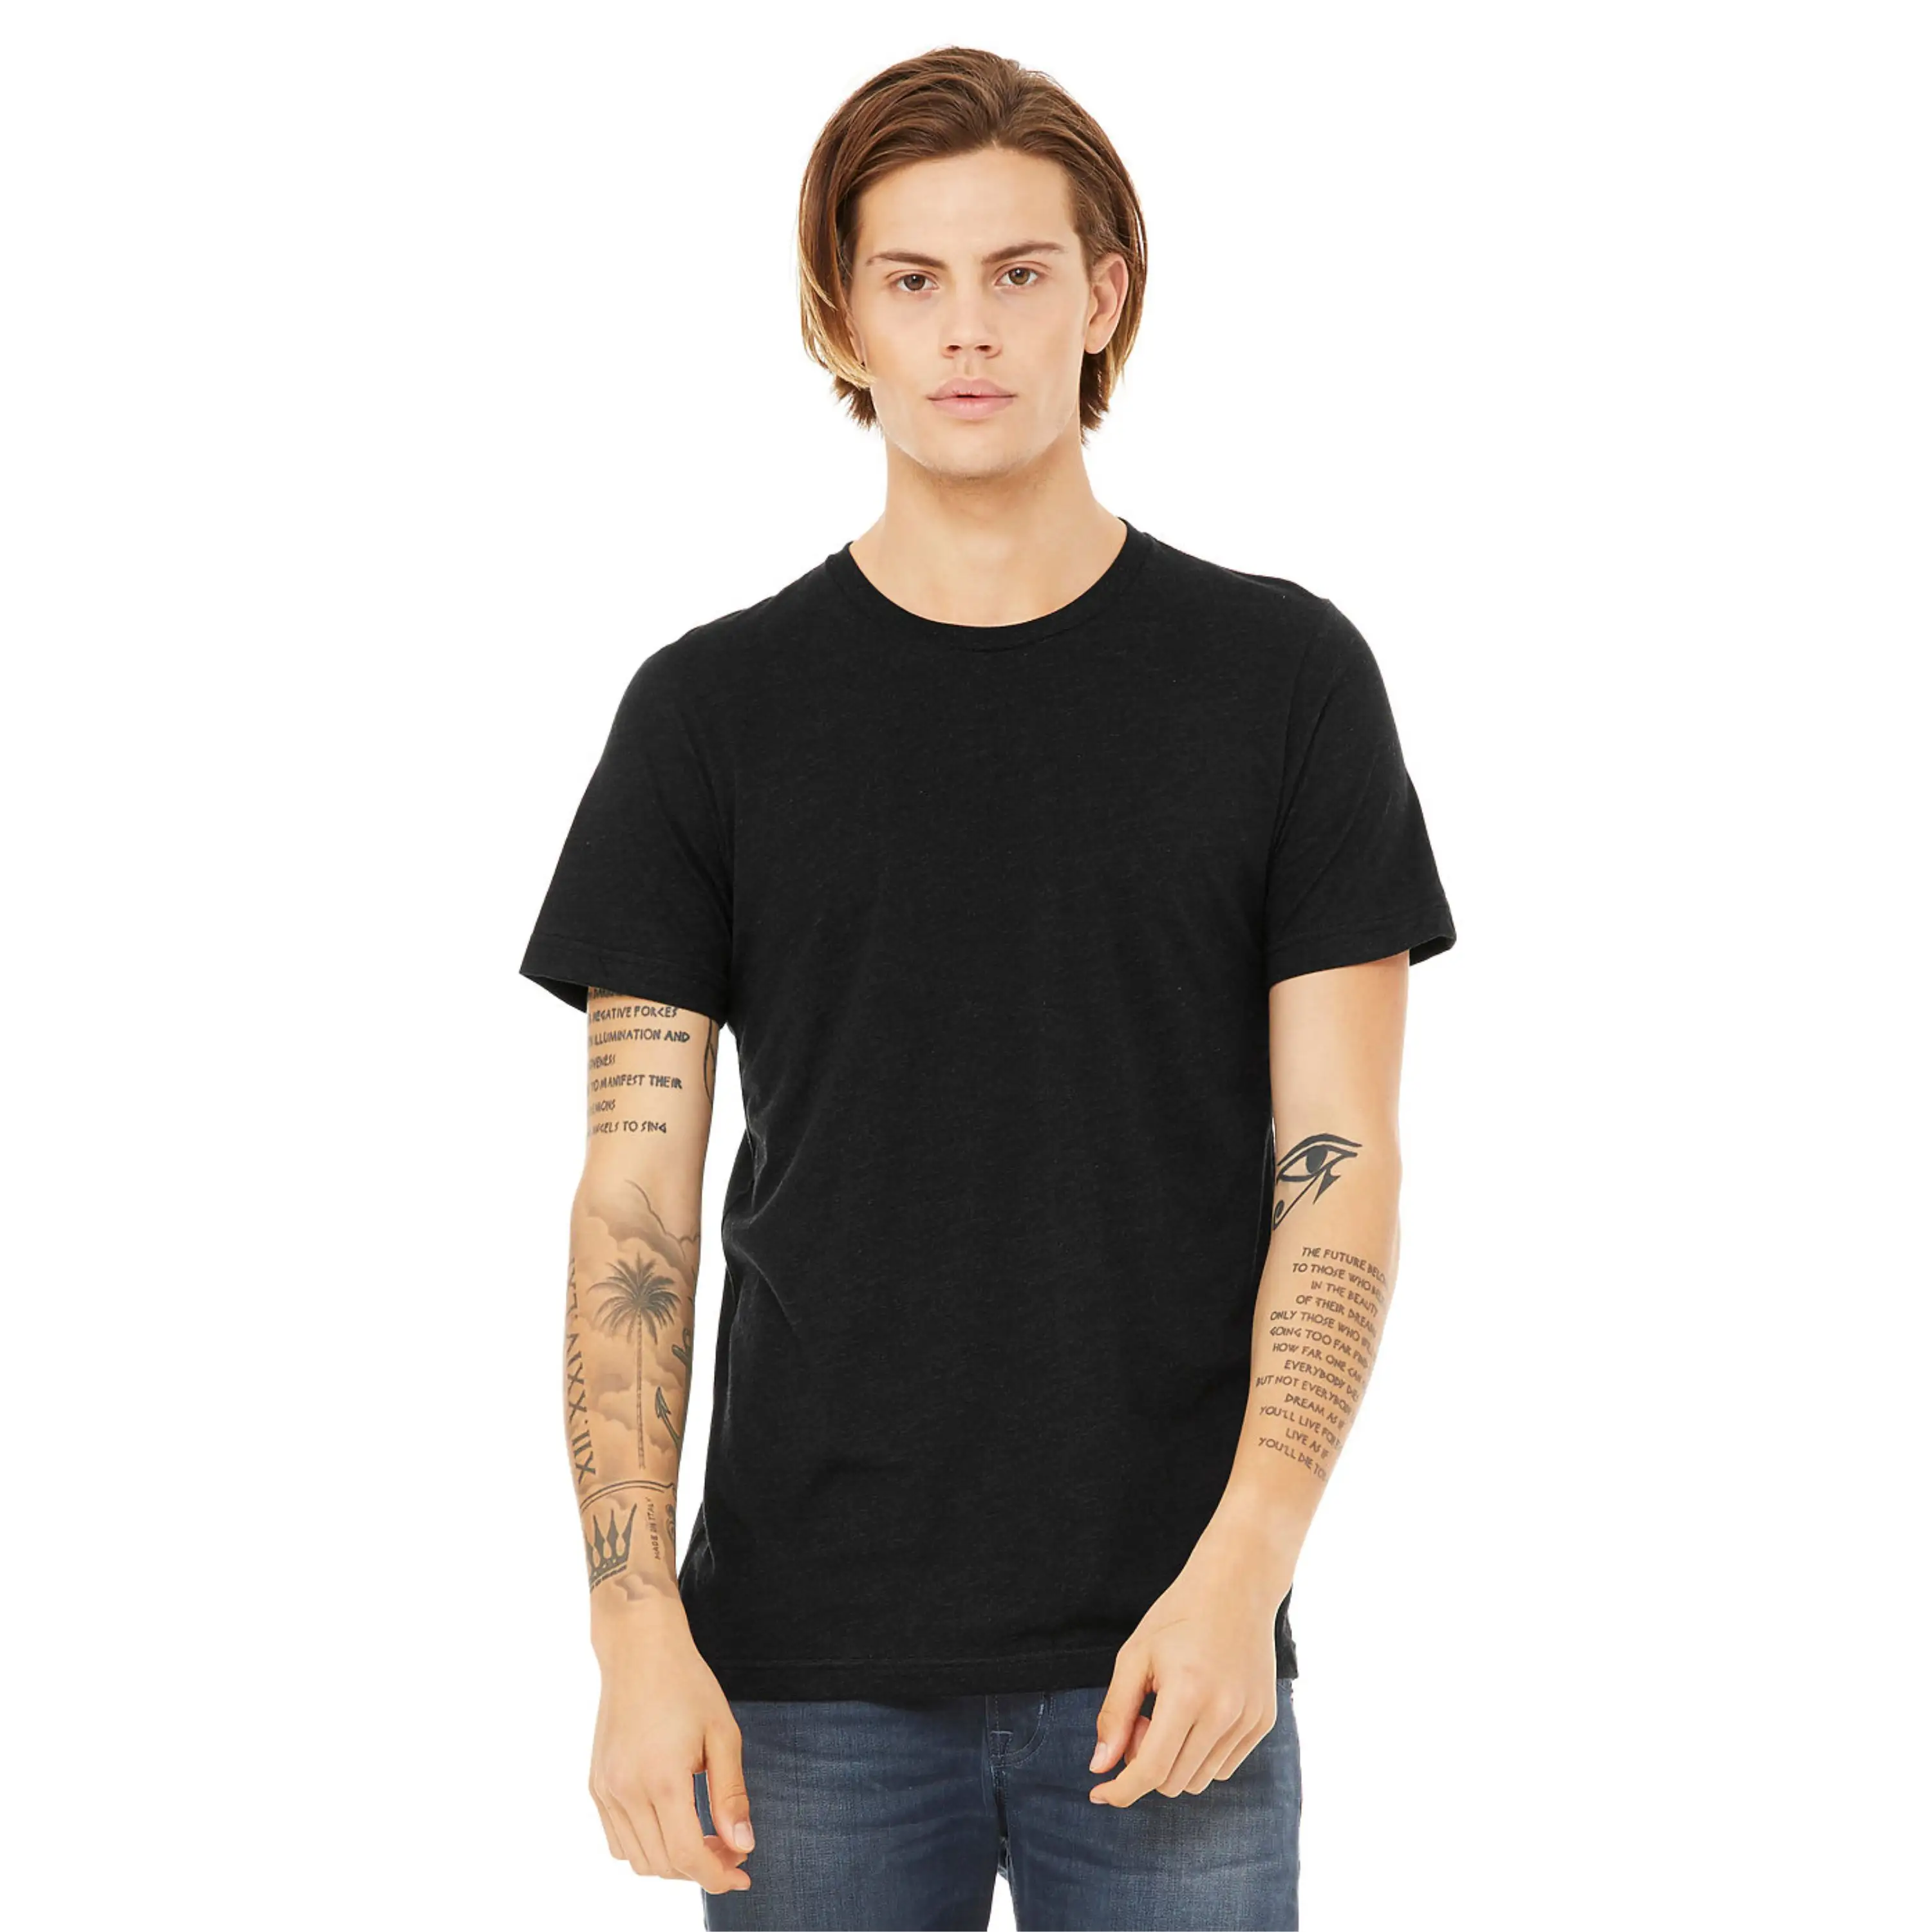 Slim Fit Short Sleeve T Shirt Top OEM Black T Shirt Light Weight 93% Cotton 7% Elastane Gym T Shirt